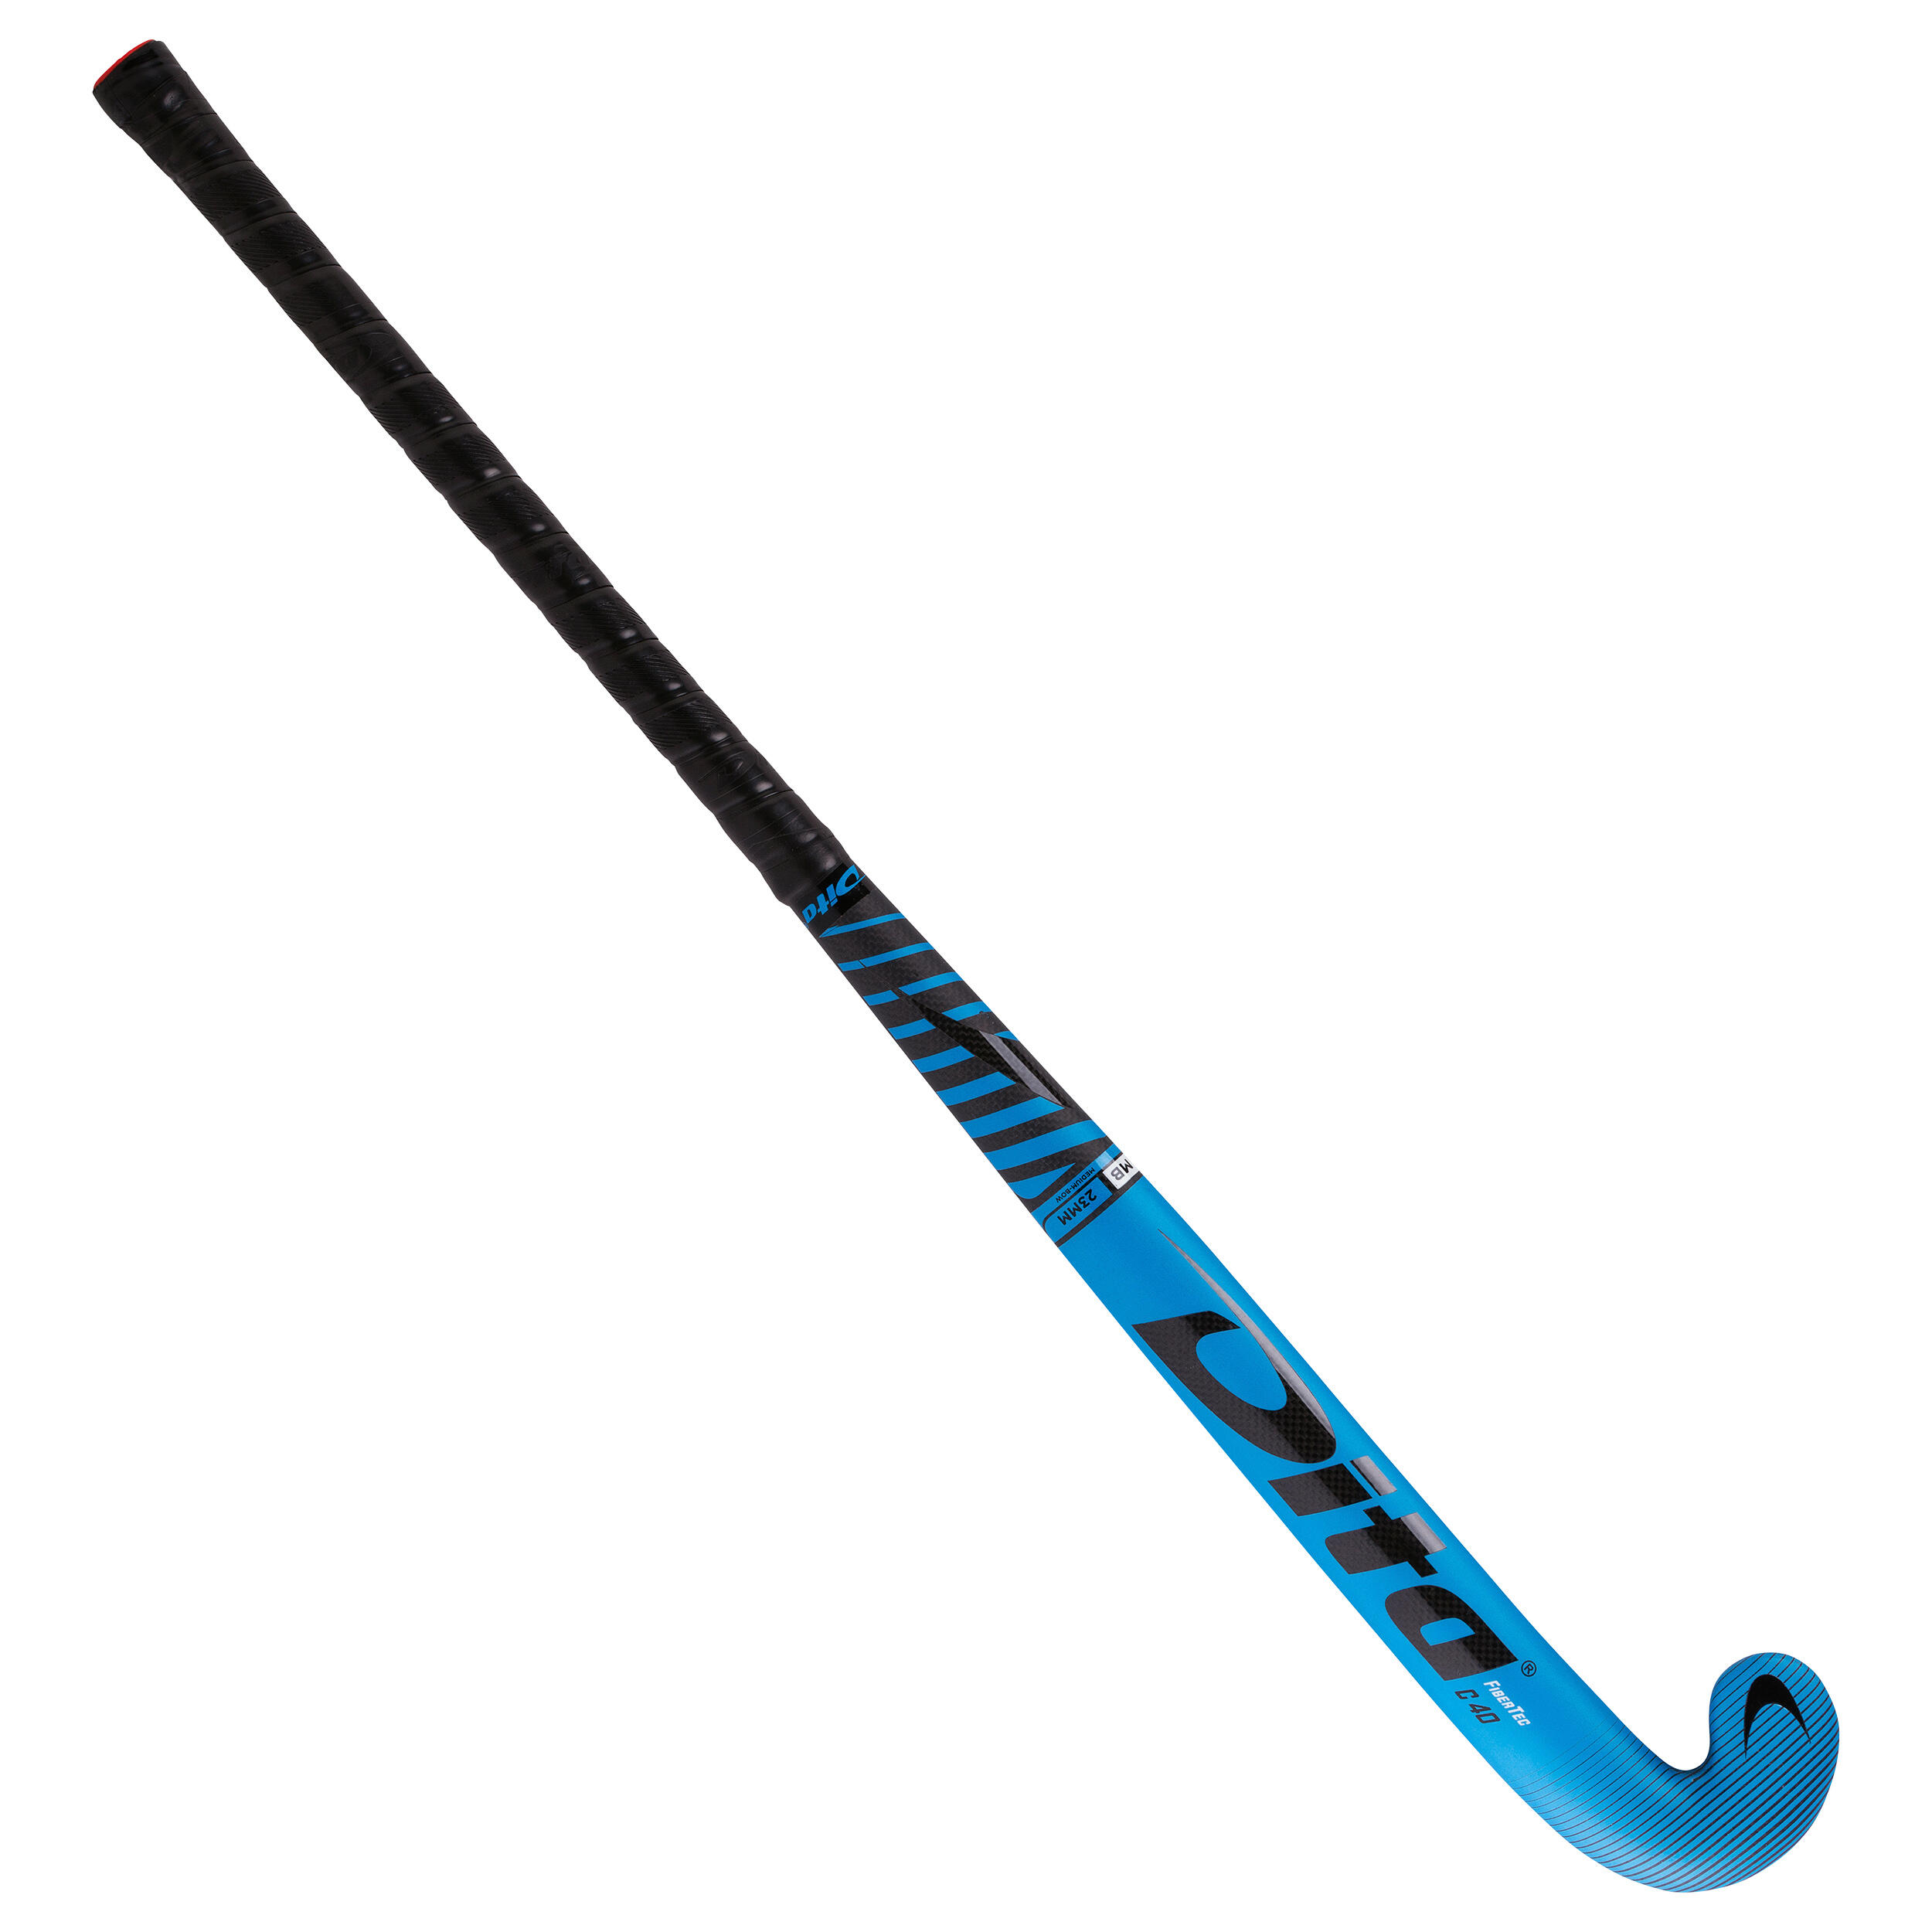 Intermediate 40% Carbon Mid Bow Field Hockey Stick FiberTecC40 - Blue 8/12